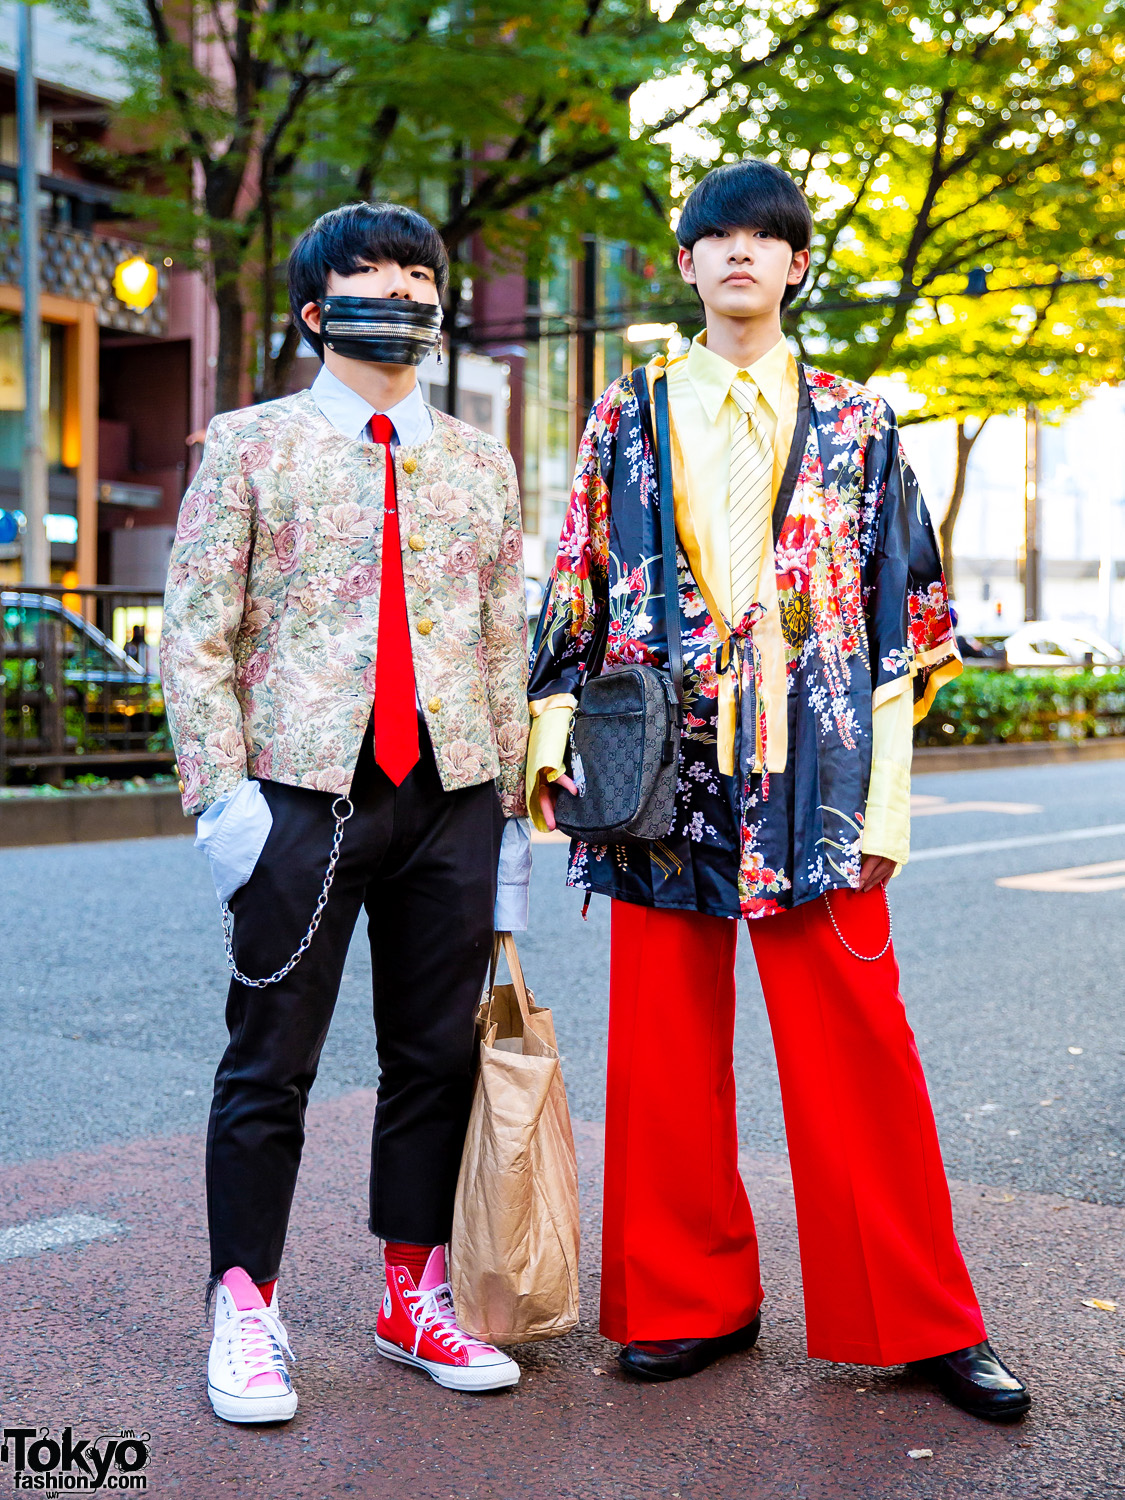 Tokyo Streetwear Styles w/ Acuod By Chanu, Dressedundressed, Ambush, Facetasm x Converse, Gucci, Vintage & Vidakush